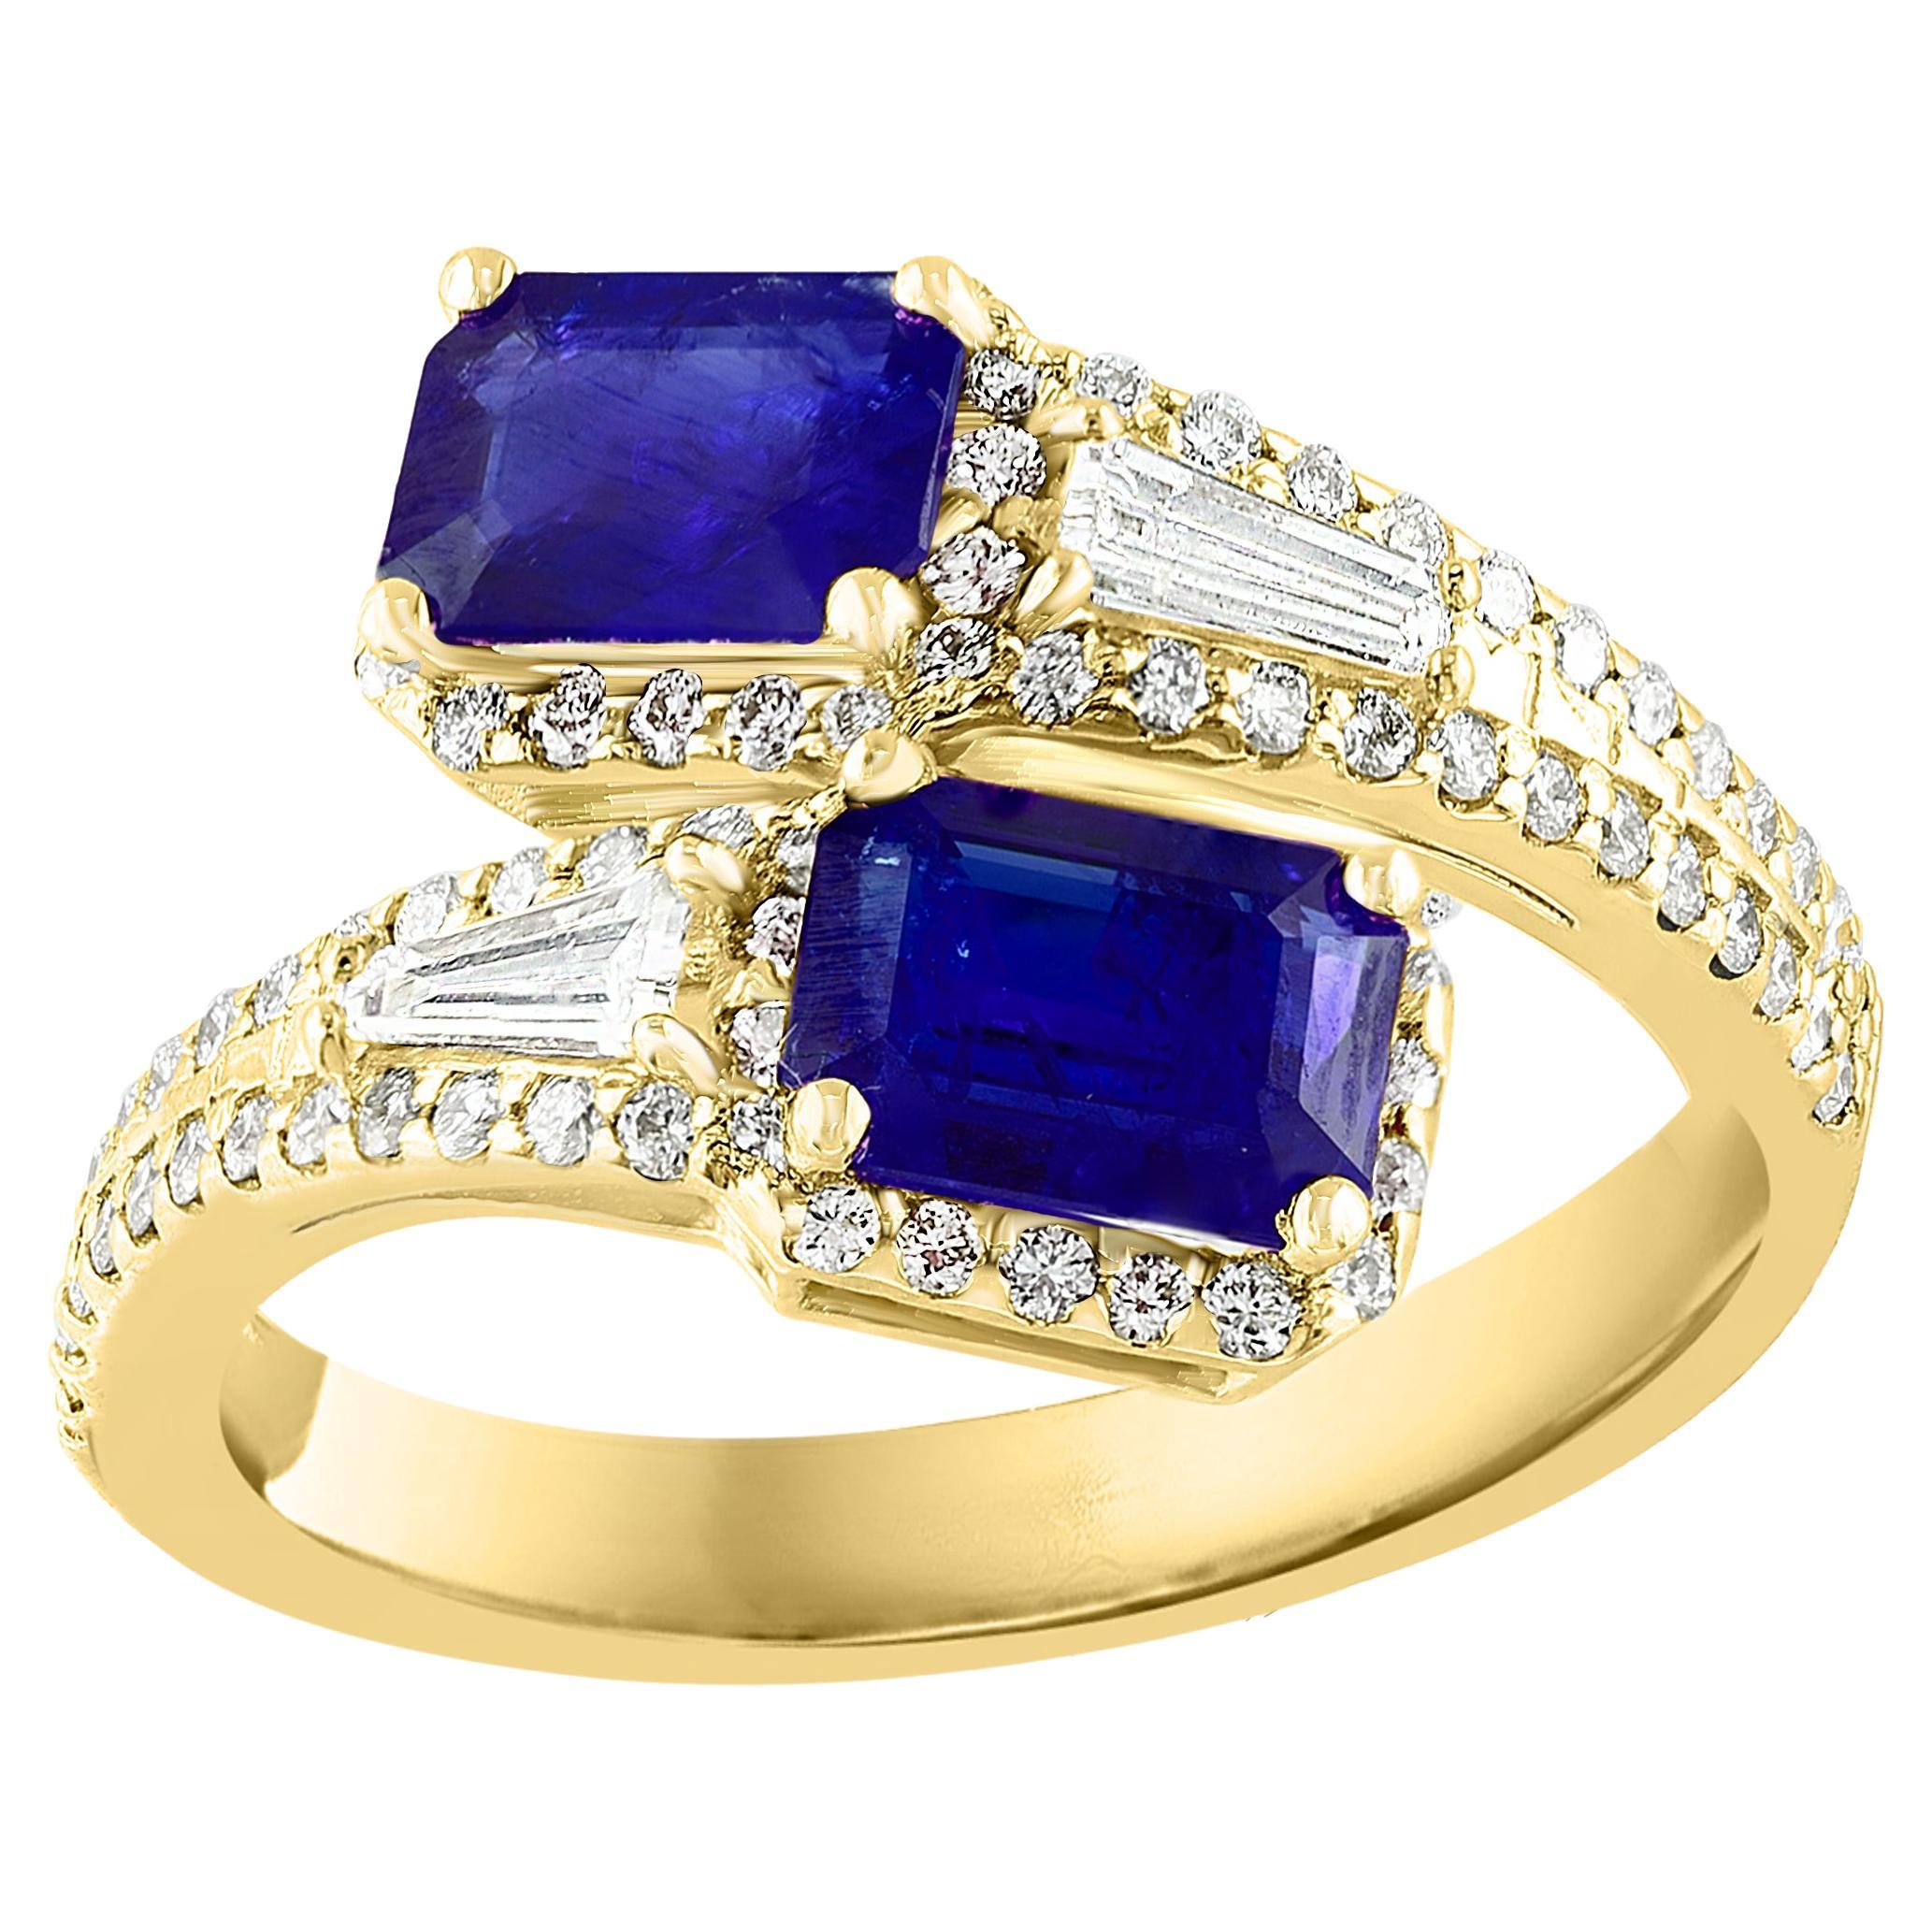 1.84 Carat EmeraldCut Sapphire Diamond Toi Et Moi Engagement Ring 14K YellowGold